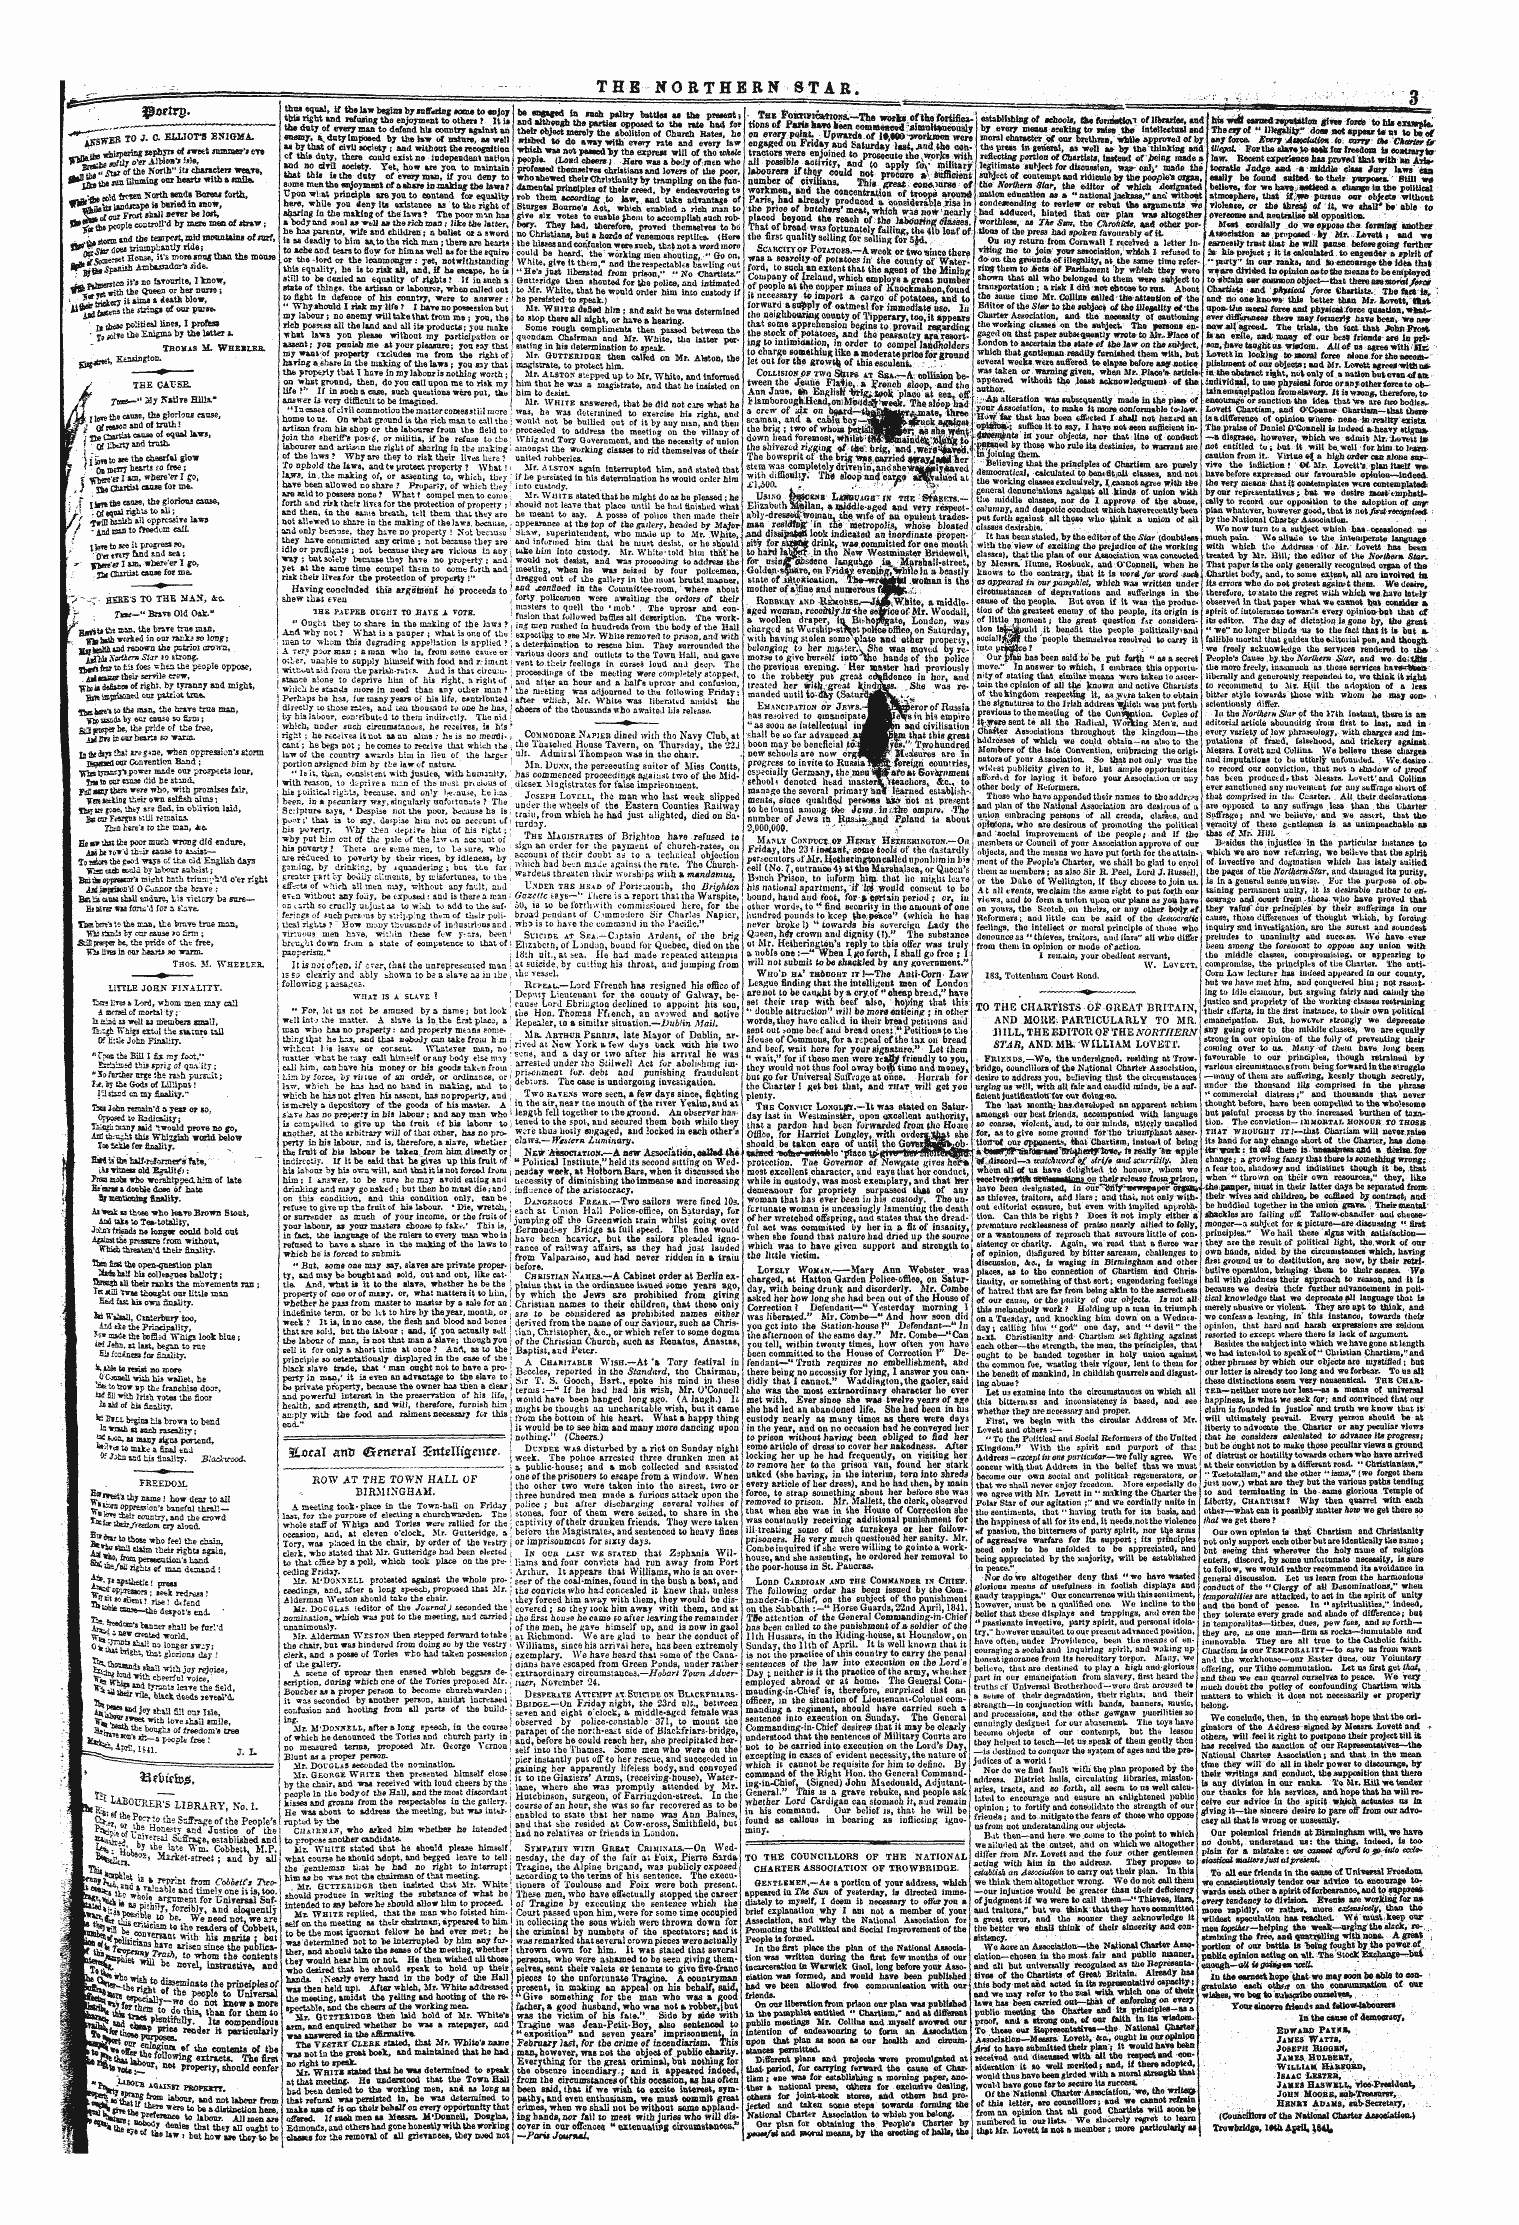 Northern Star (1837-1852): jS F Y, 1st edition - 5lt&Gt;Cax Antr General 32ttetli£Tnte